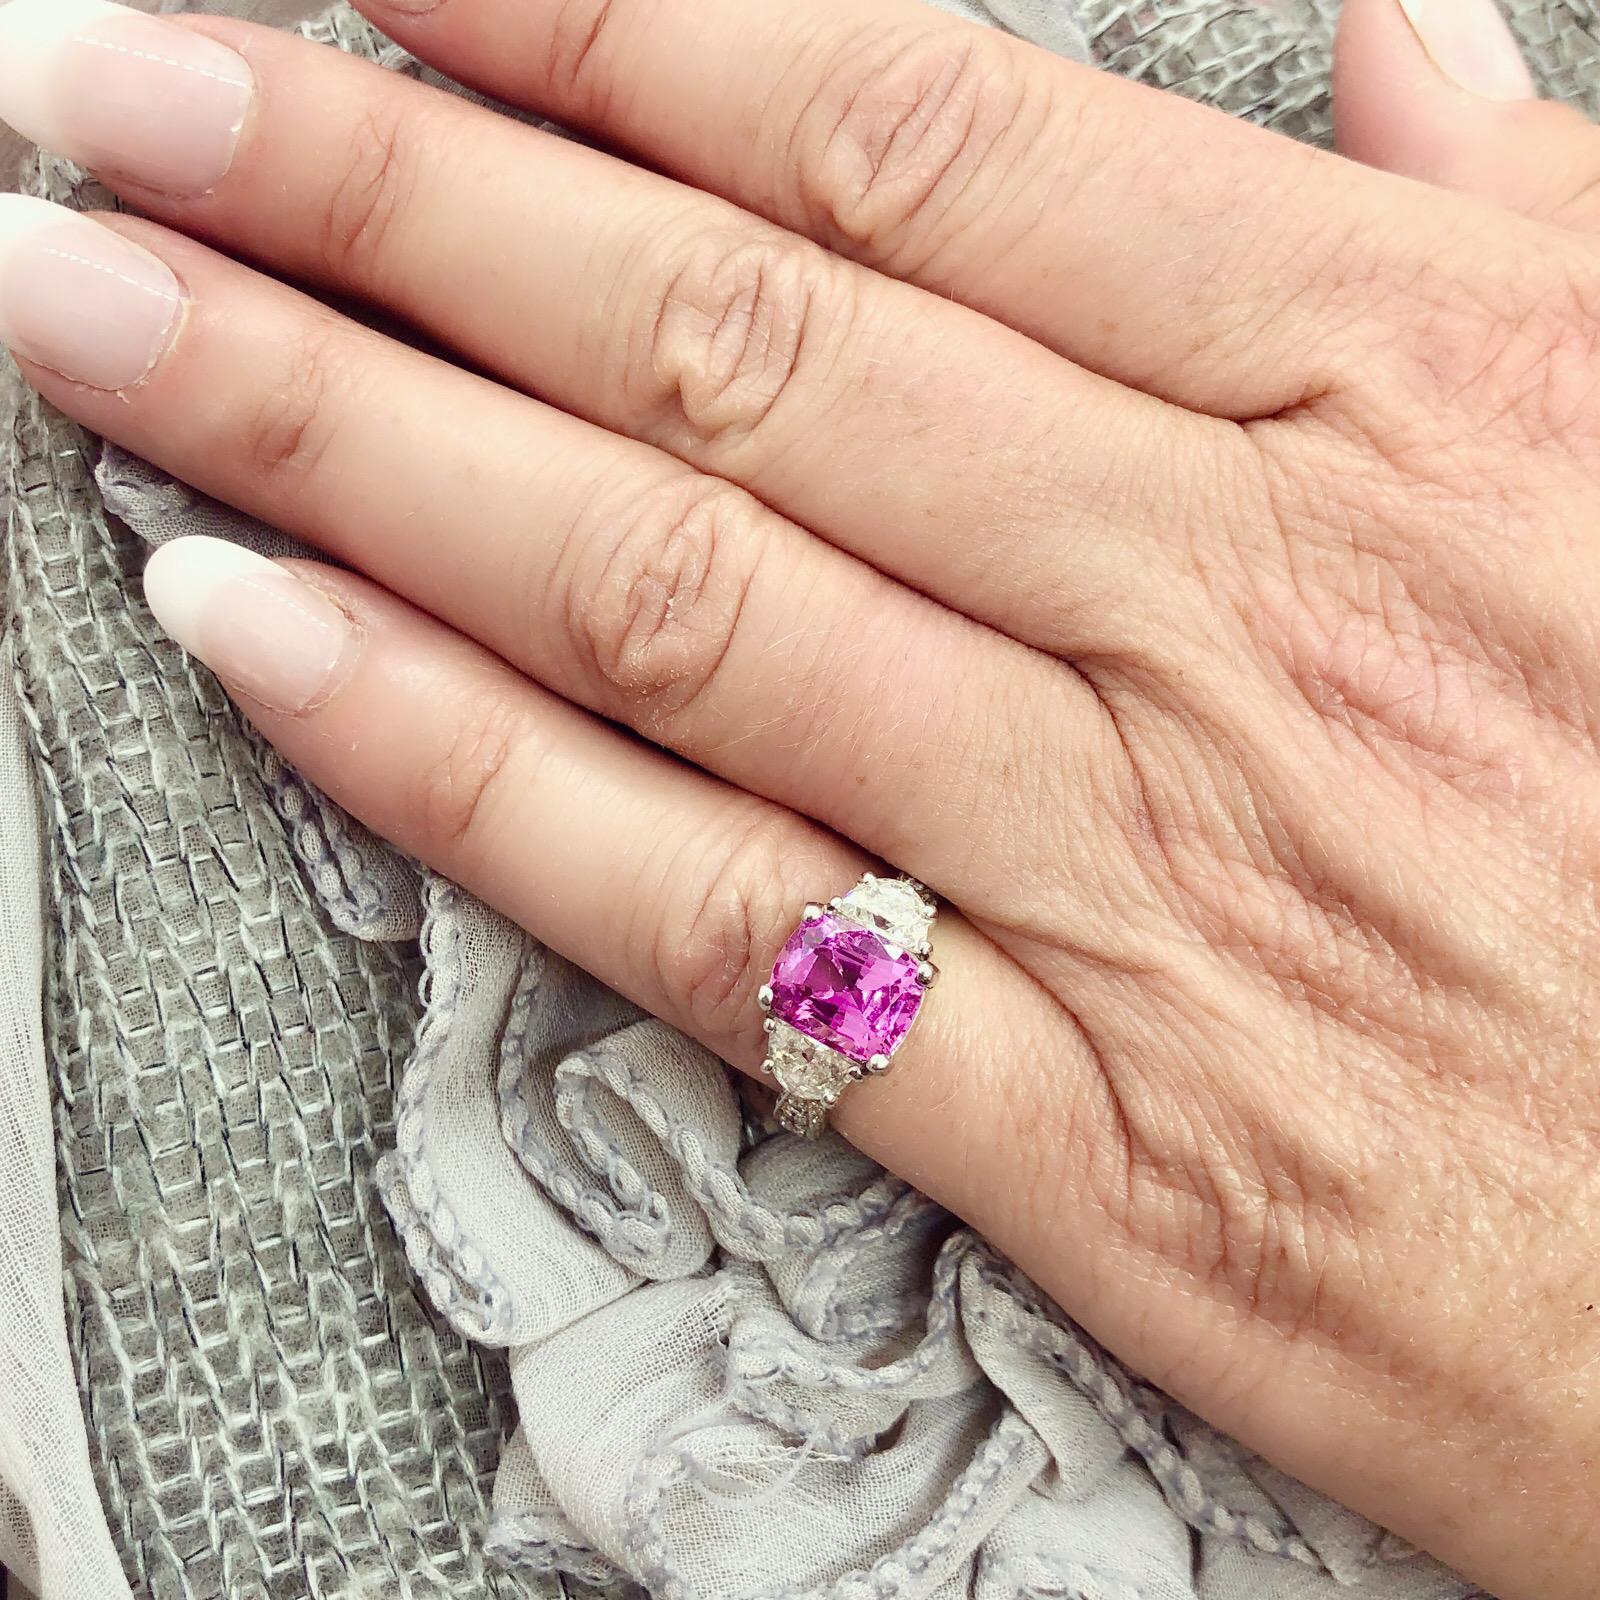 light pink sapphire ring